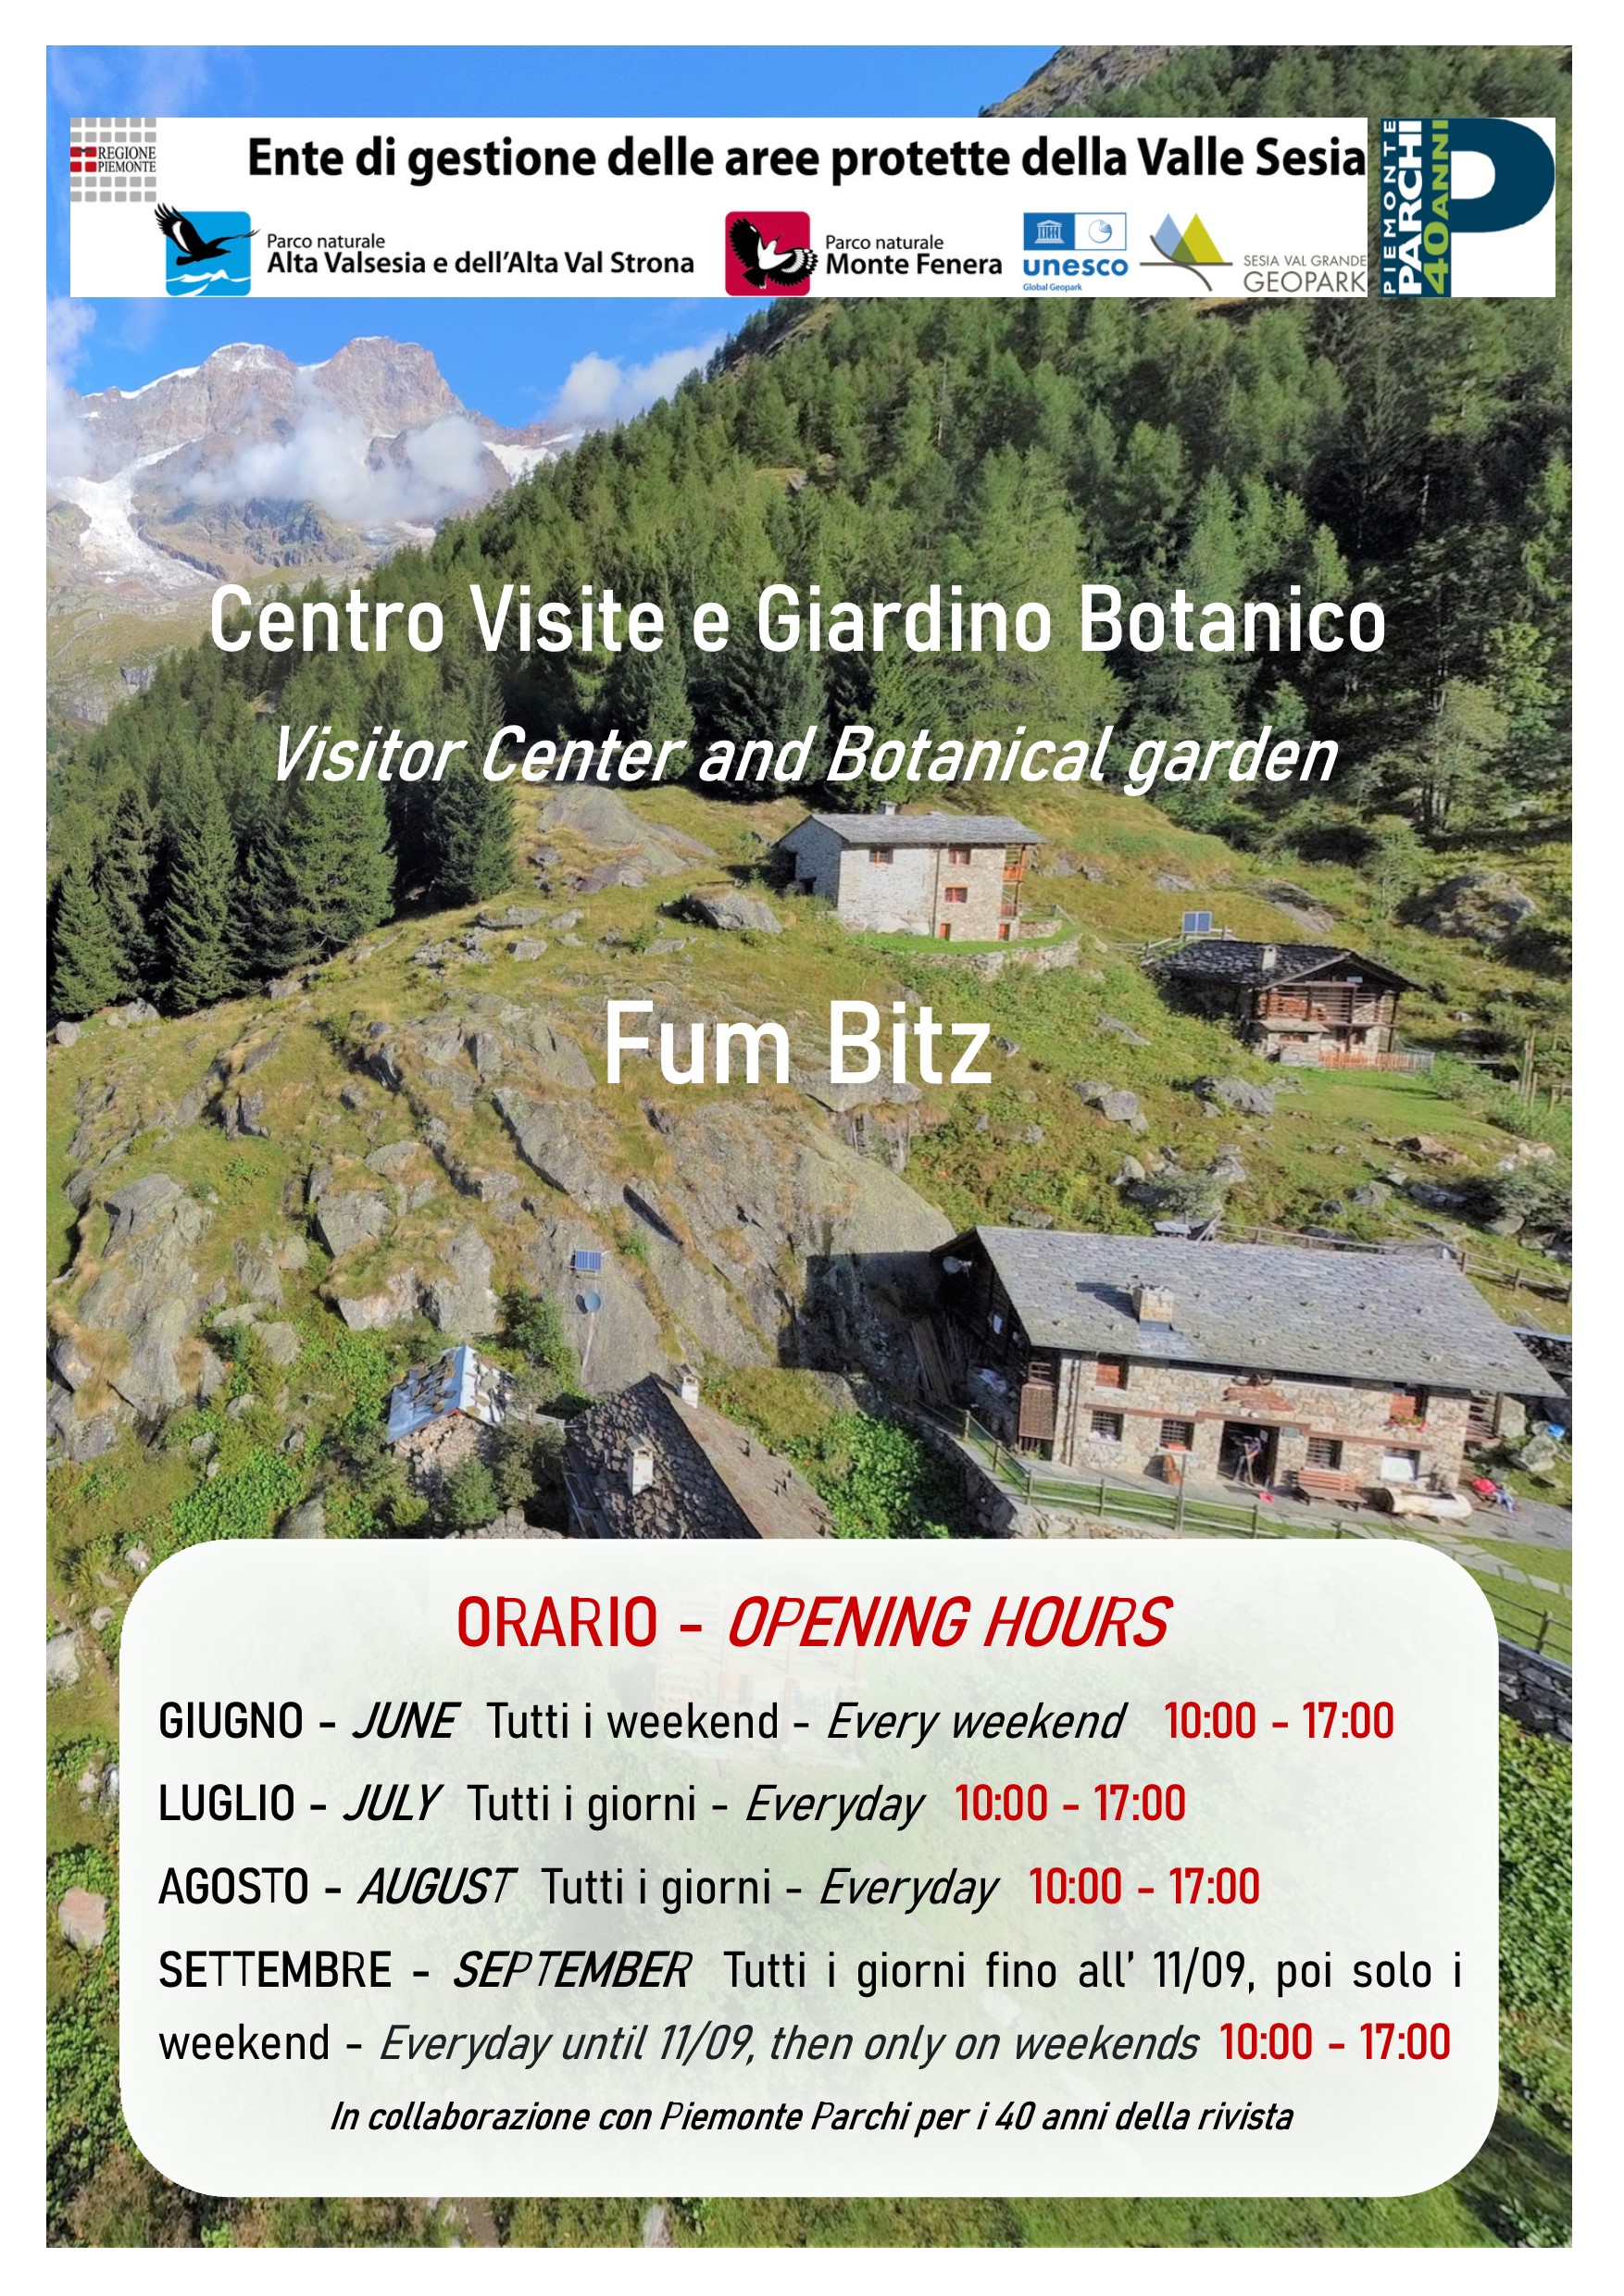 Aperture e Orari Centro Visite e Giardino Botanico Alpe Fum Bitz